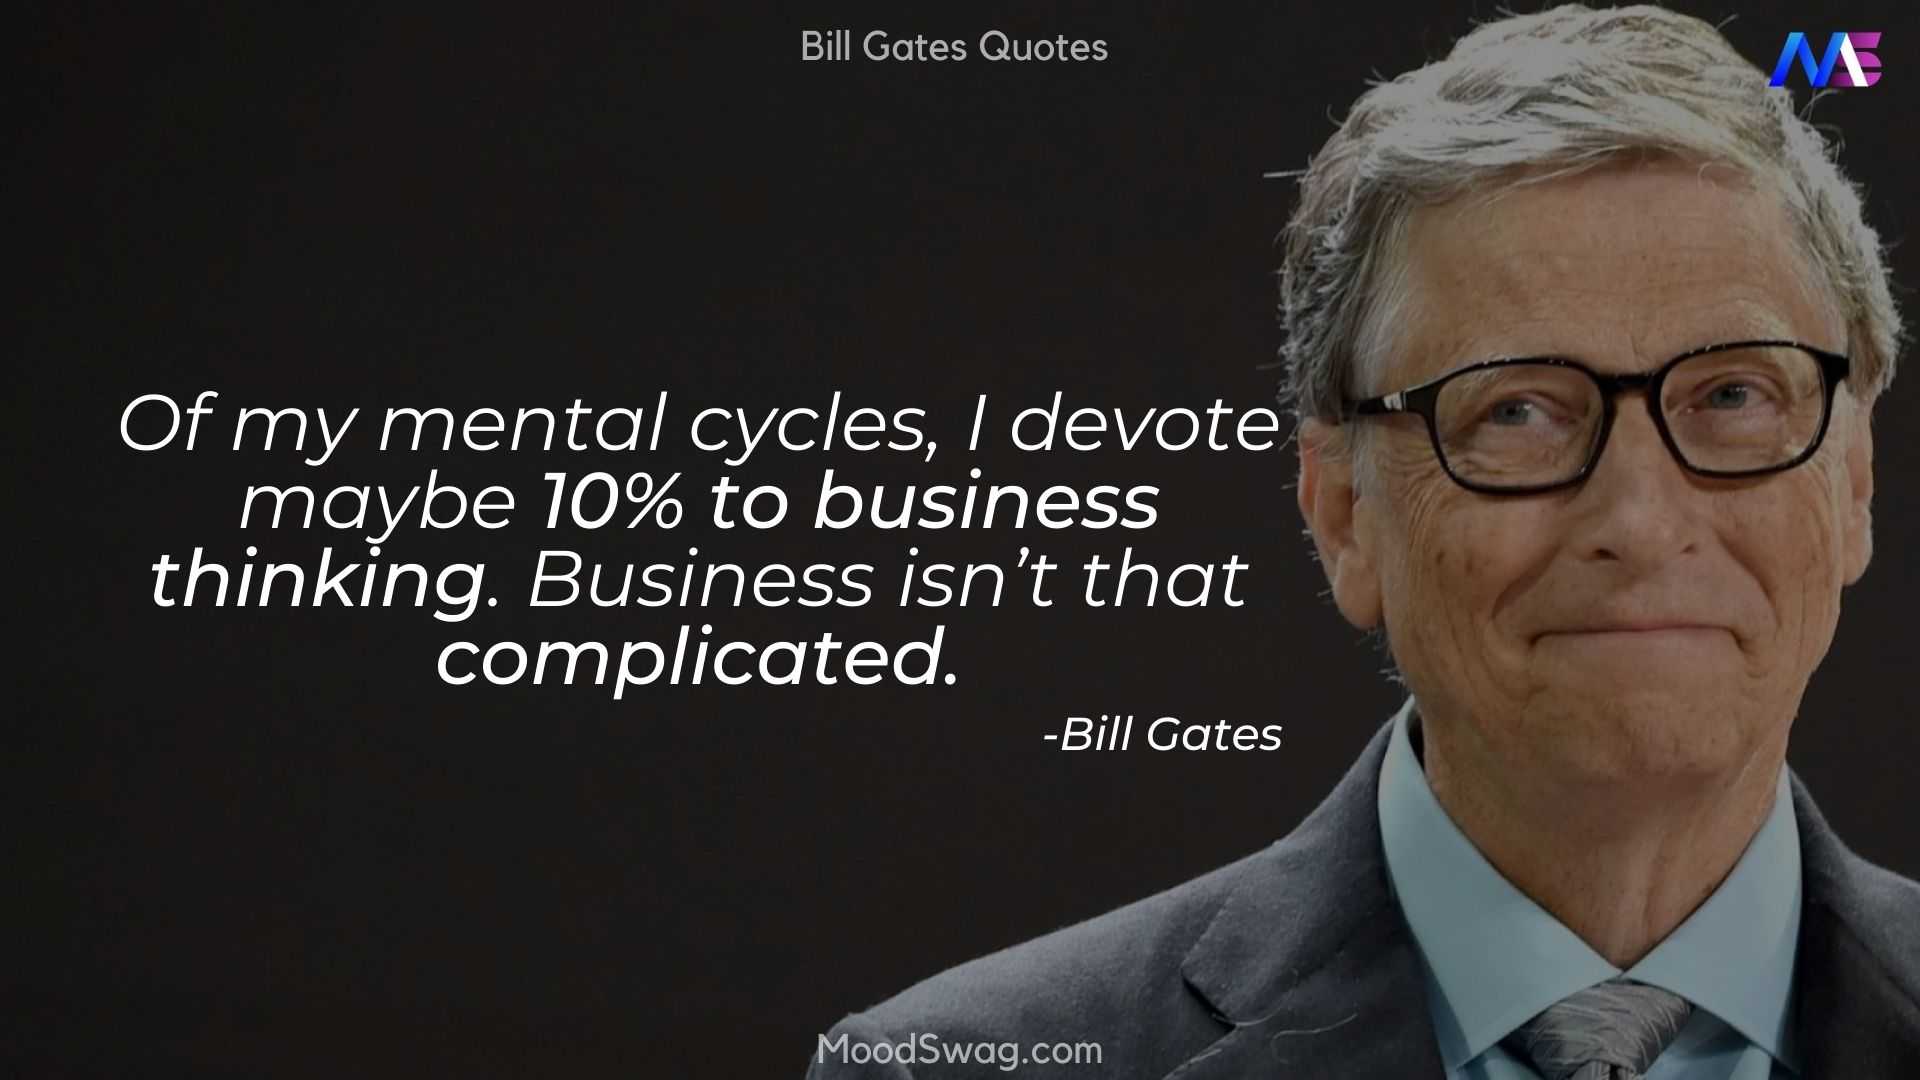 40 Inspiring Bill Gates Quotes to Change Your Mindset - Moodswag